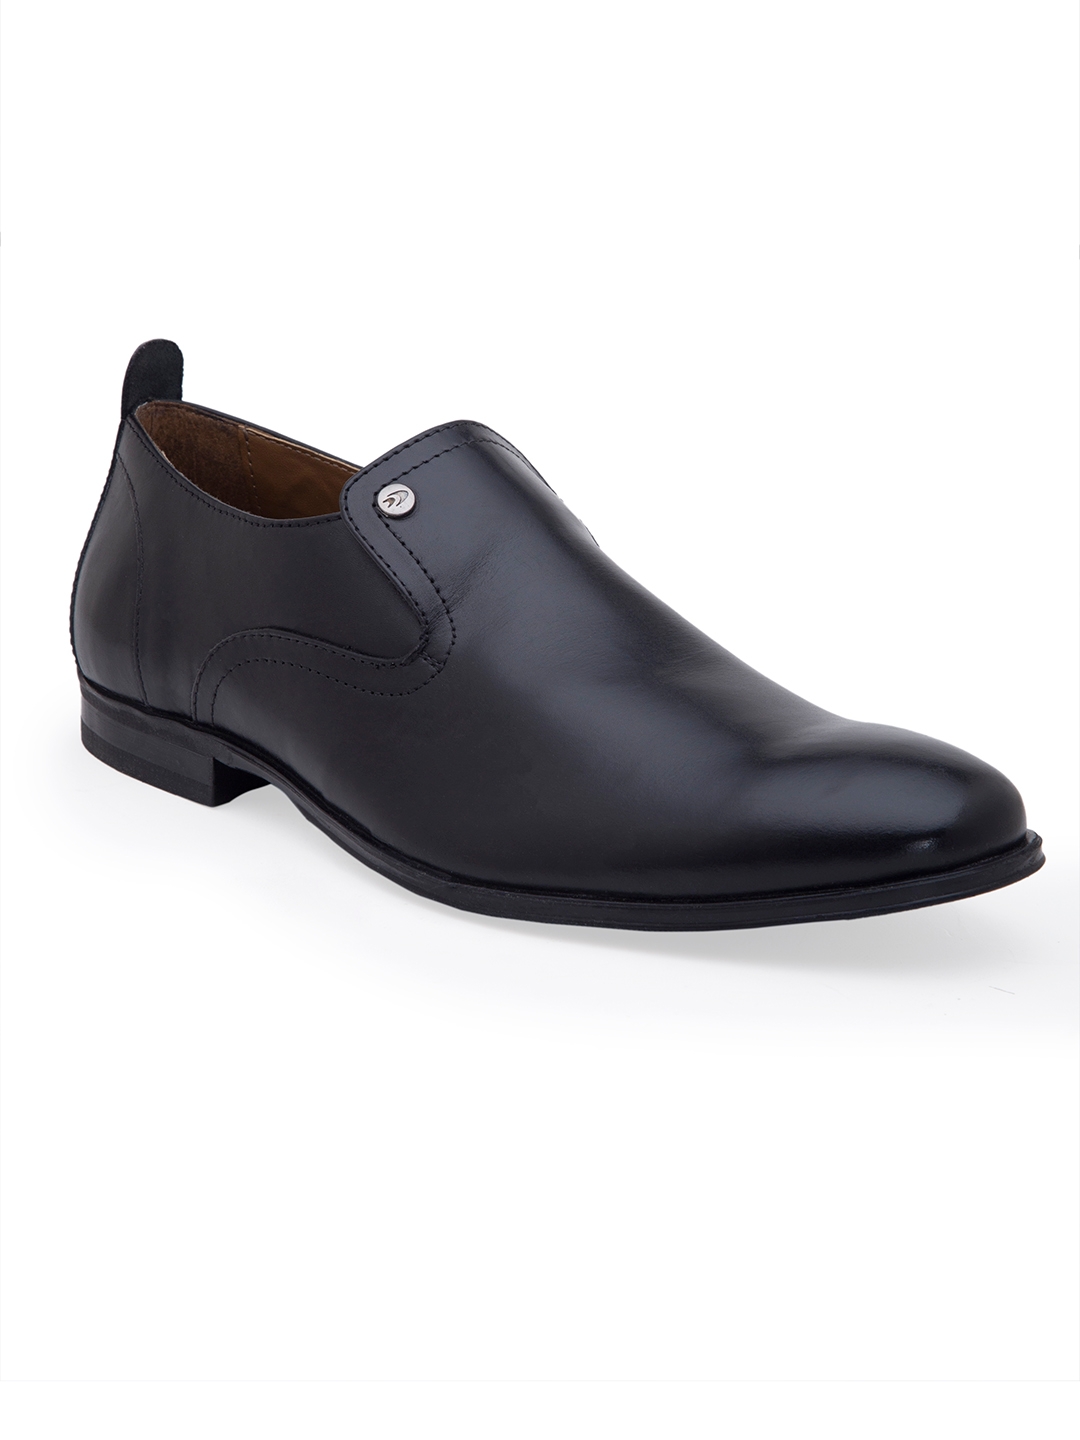 Allen Cooper | Allen Cooper Black Slip On Formal Shoes For Men